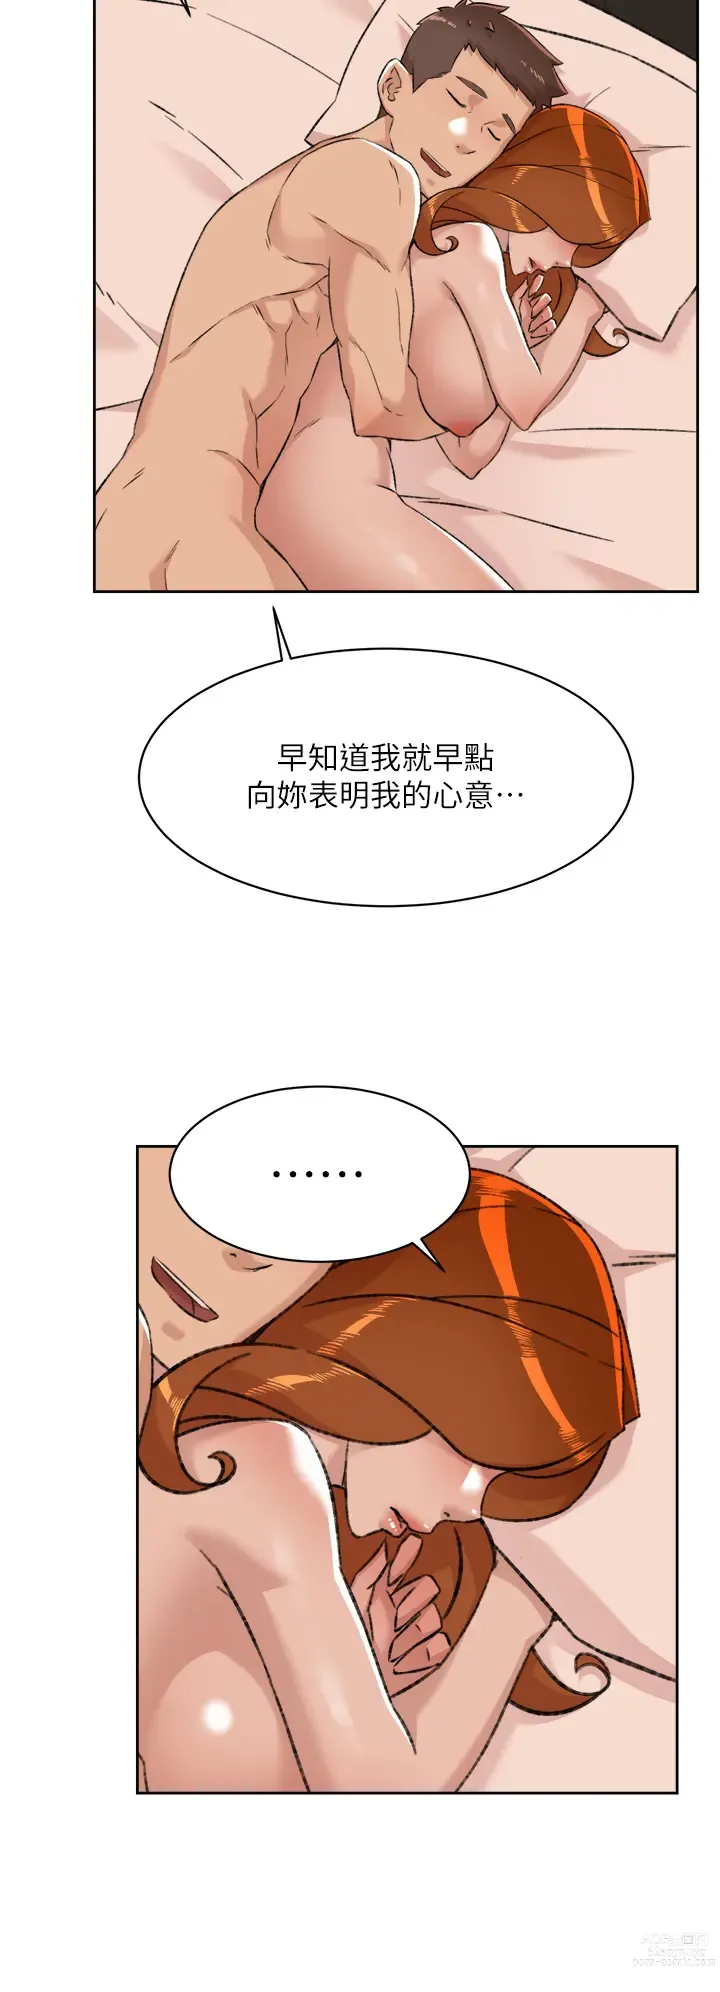 Page 978 of manga 好友的私生活